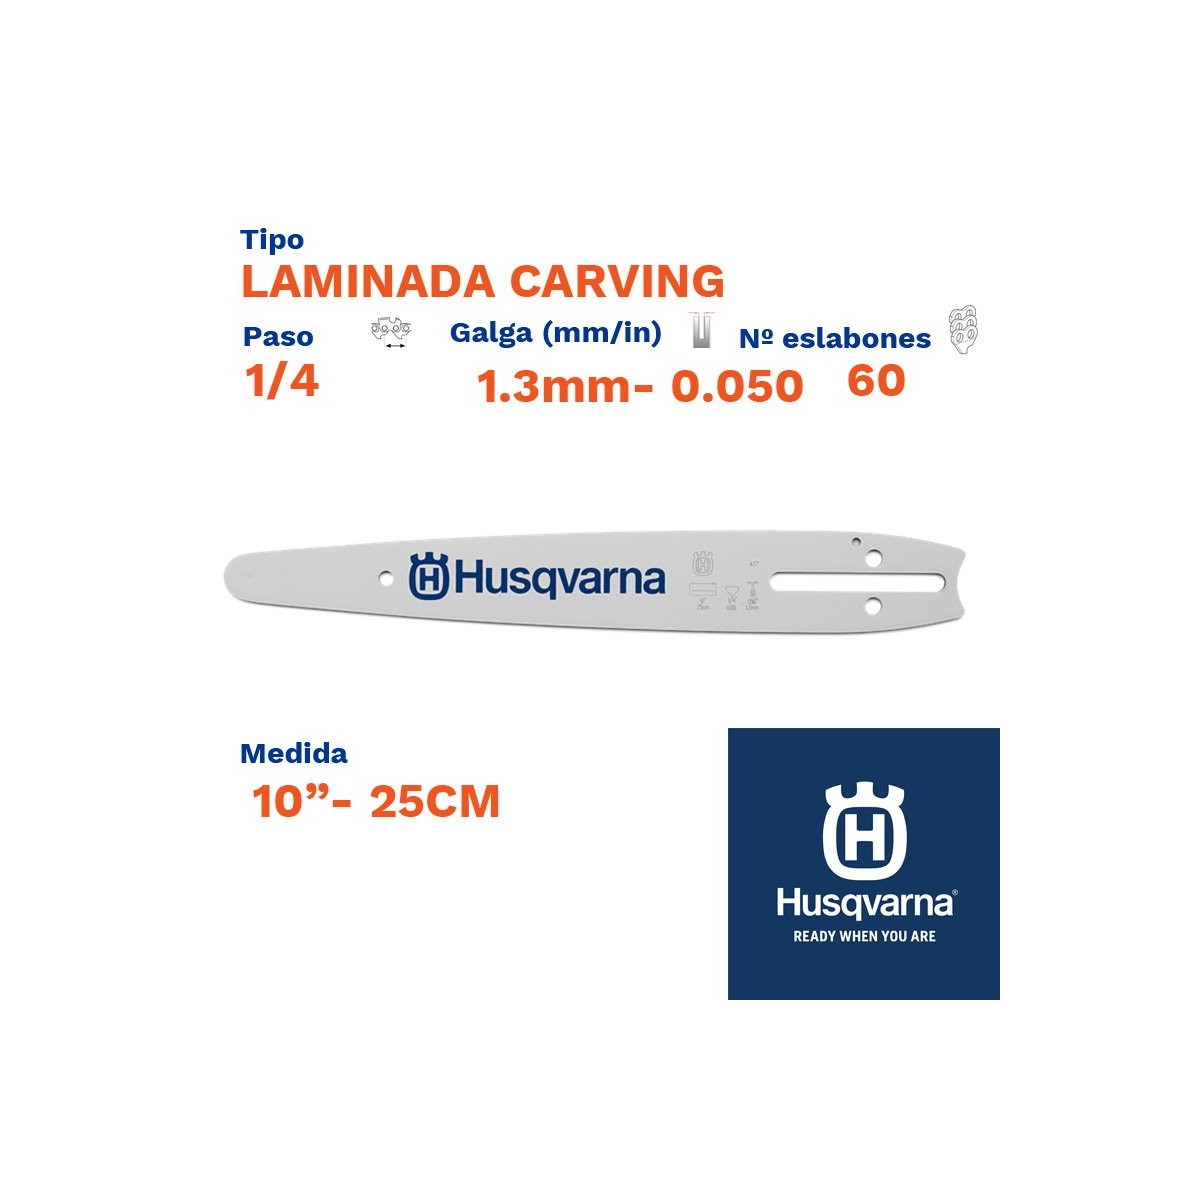 Husqvarna espada laminada carving 1.3mm 60 eslabones-pc 1/4  10"- 25cm